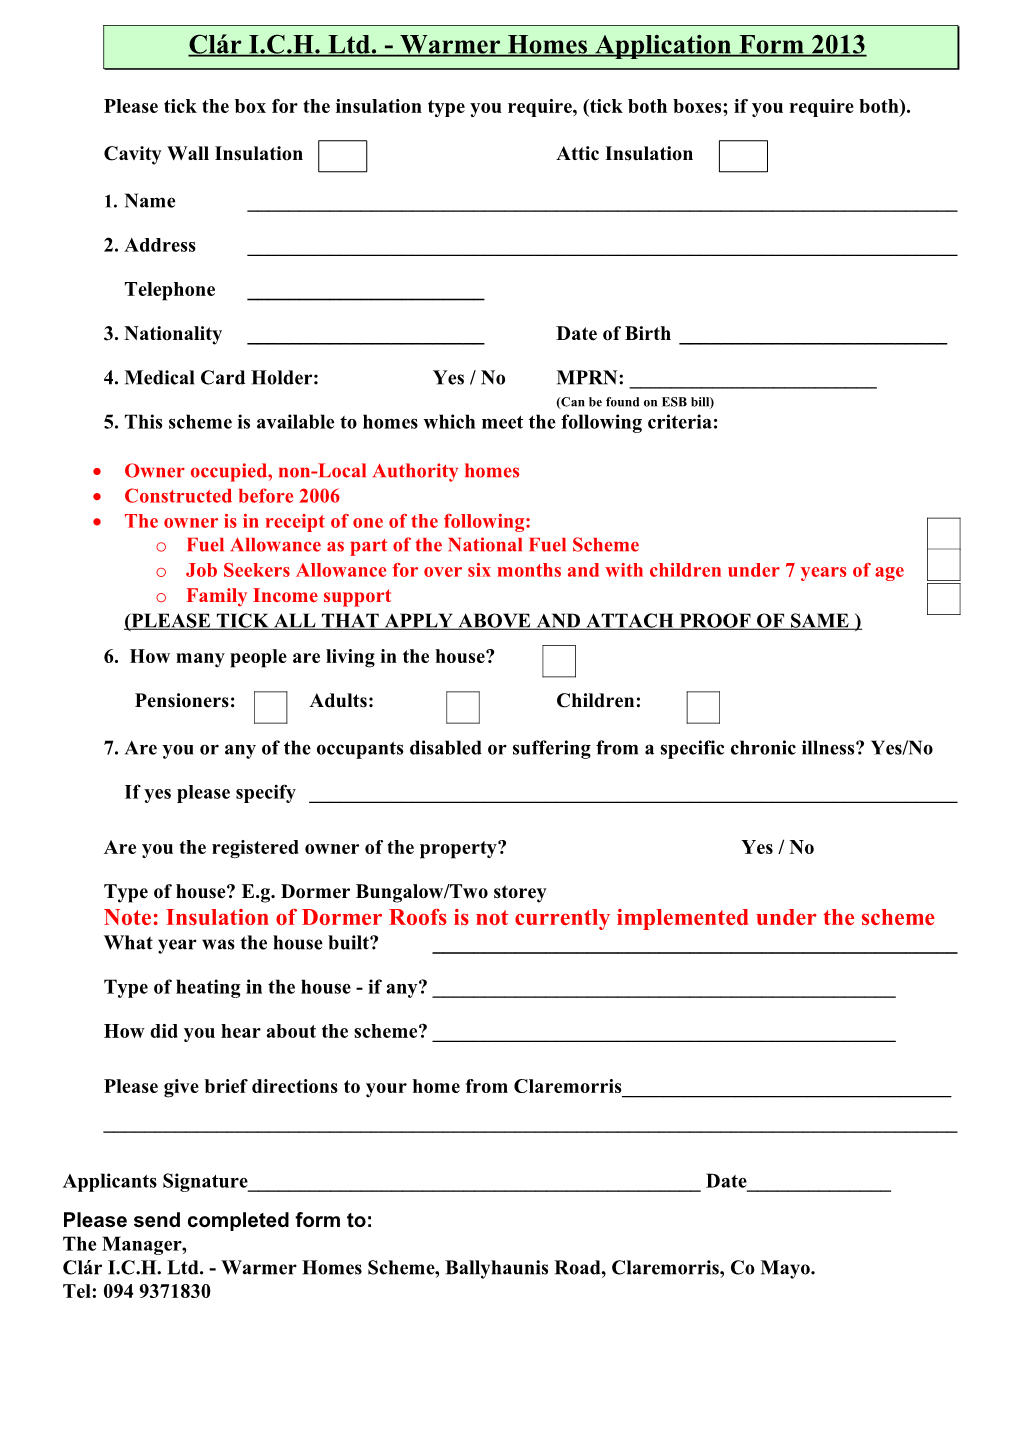 Clár I.C.H. Ltd. - Warmer Homes Application Form 2013